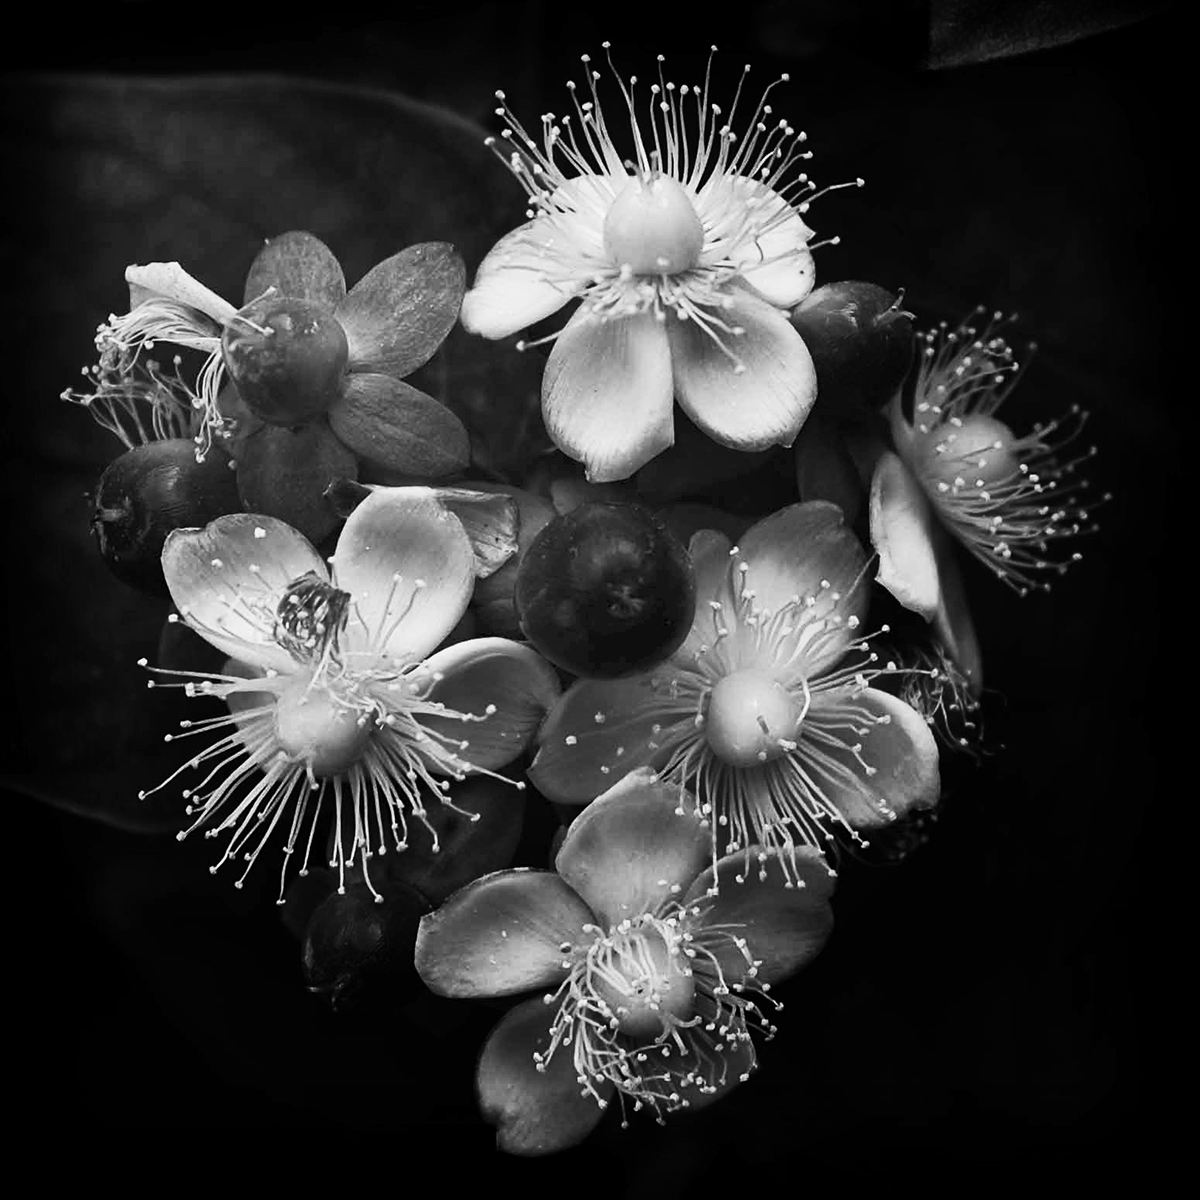 black and white Nature Flowers macro photos art artistic